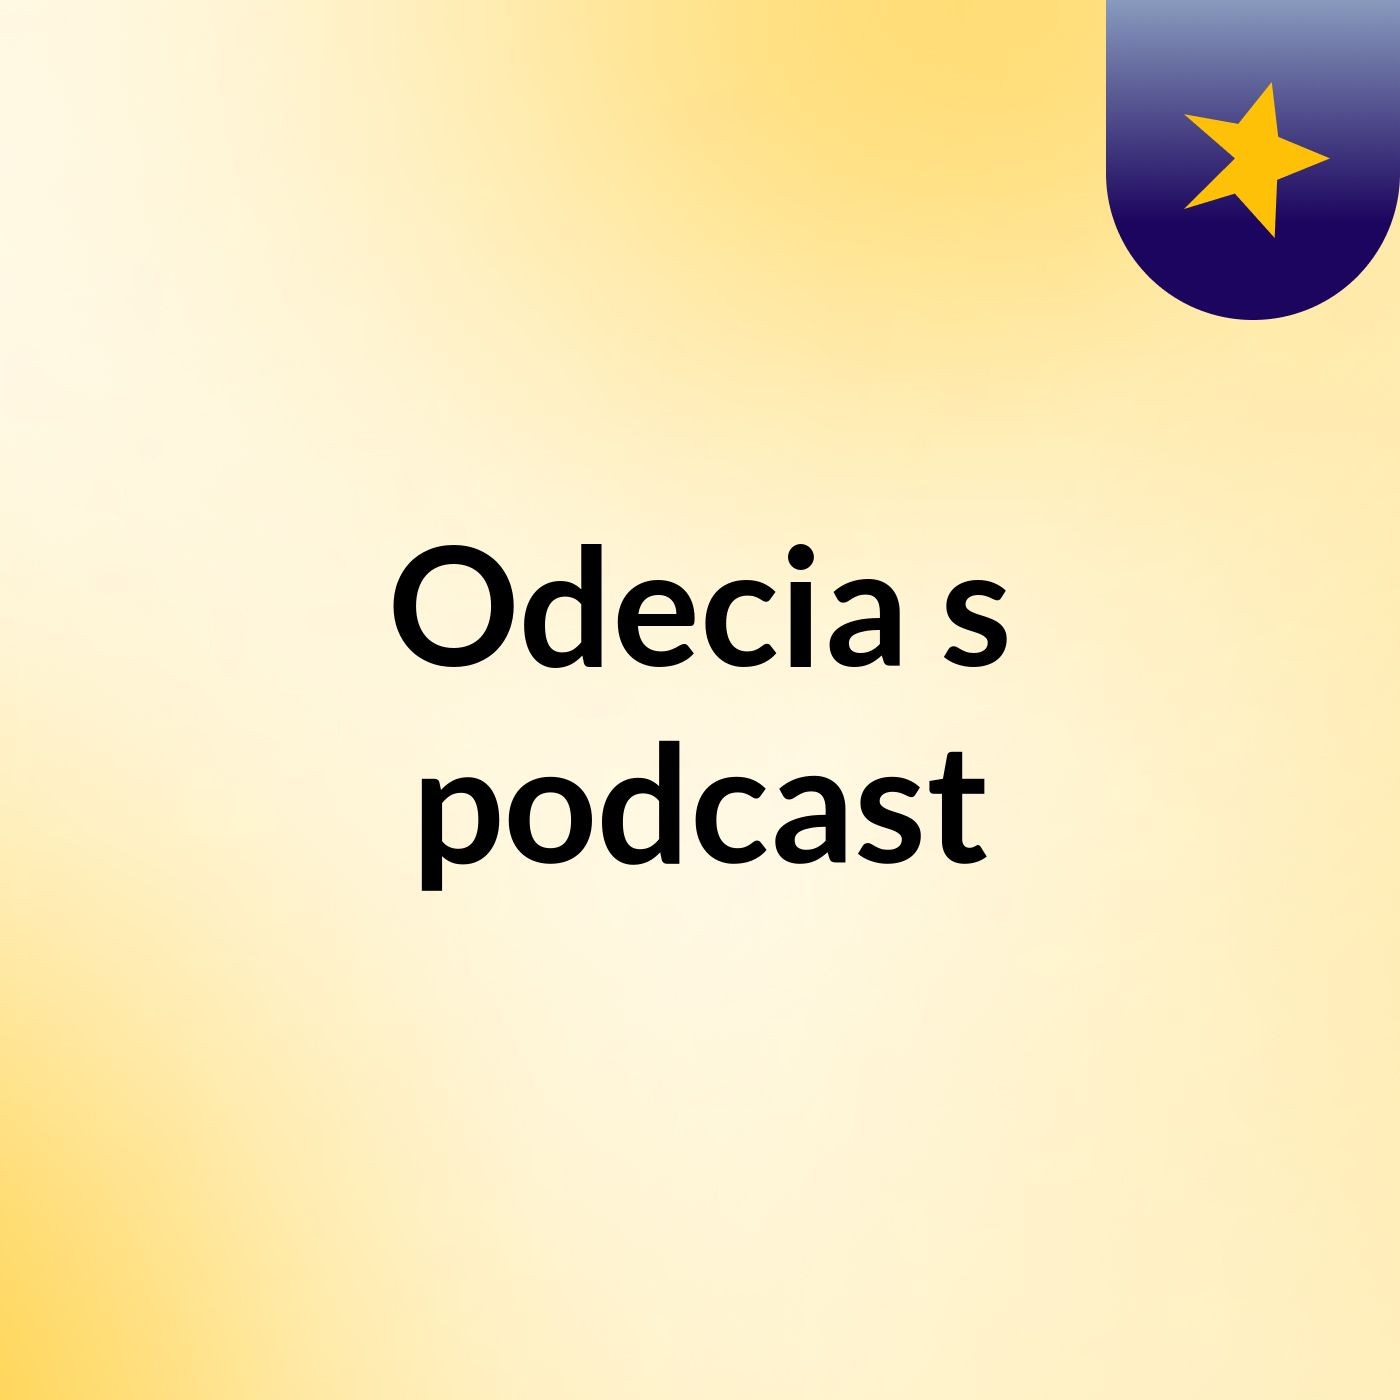 Odecia's podcast